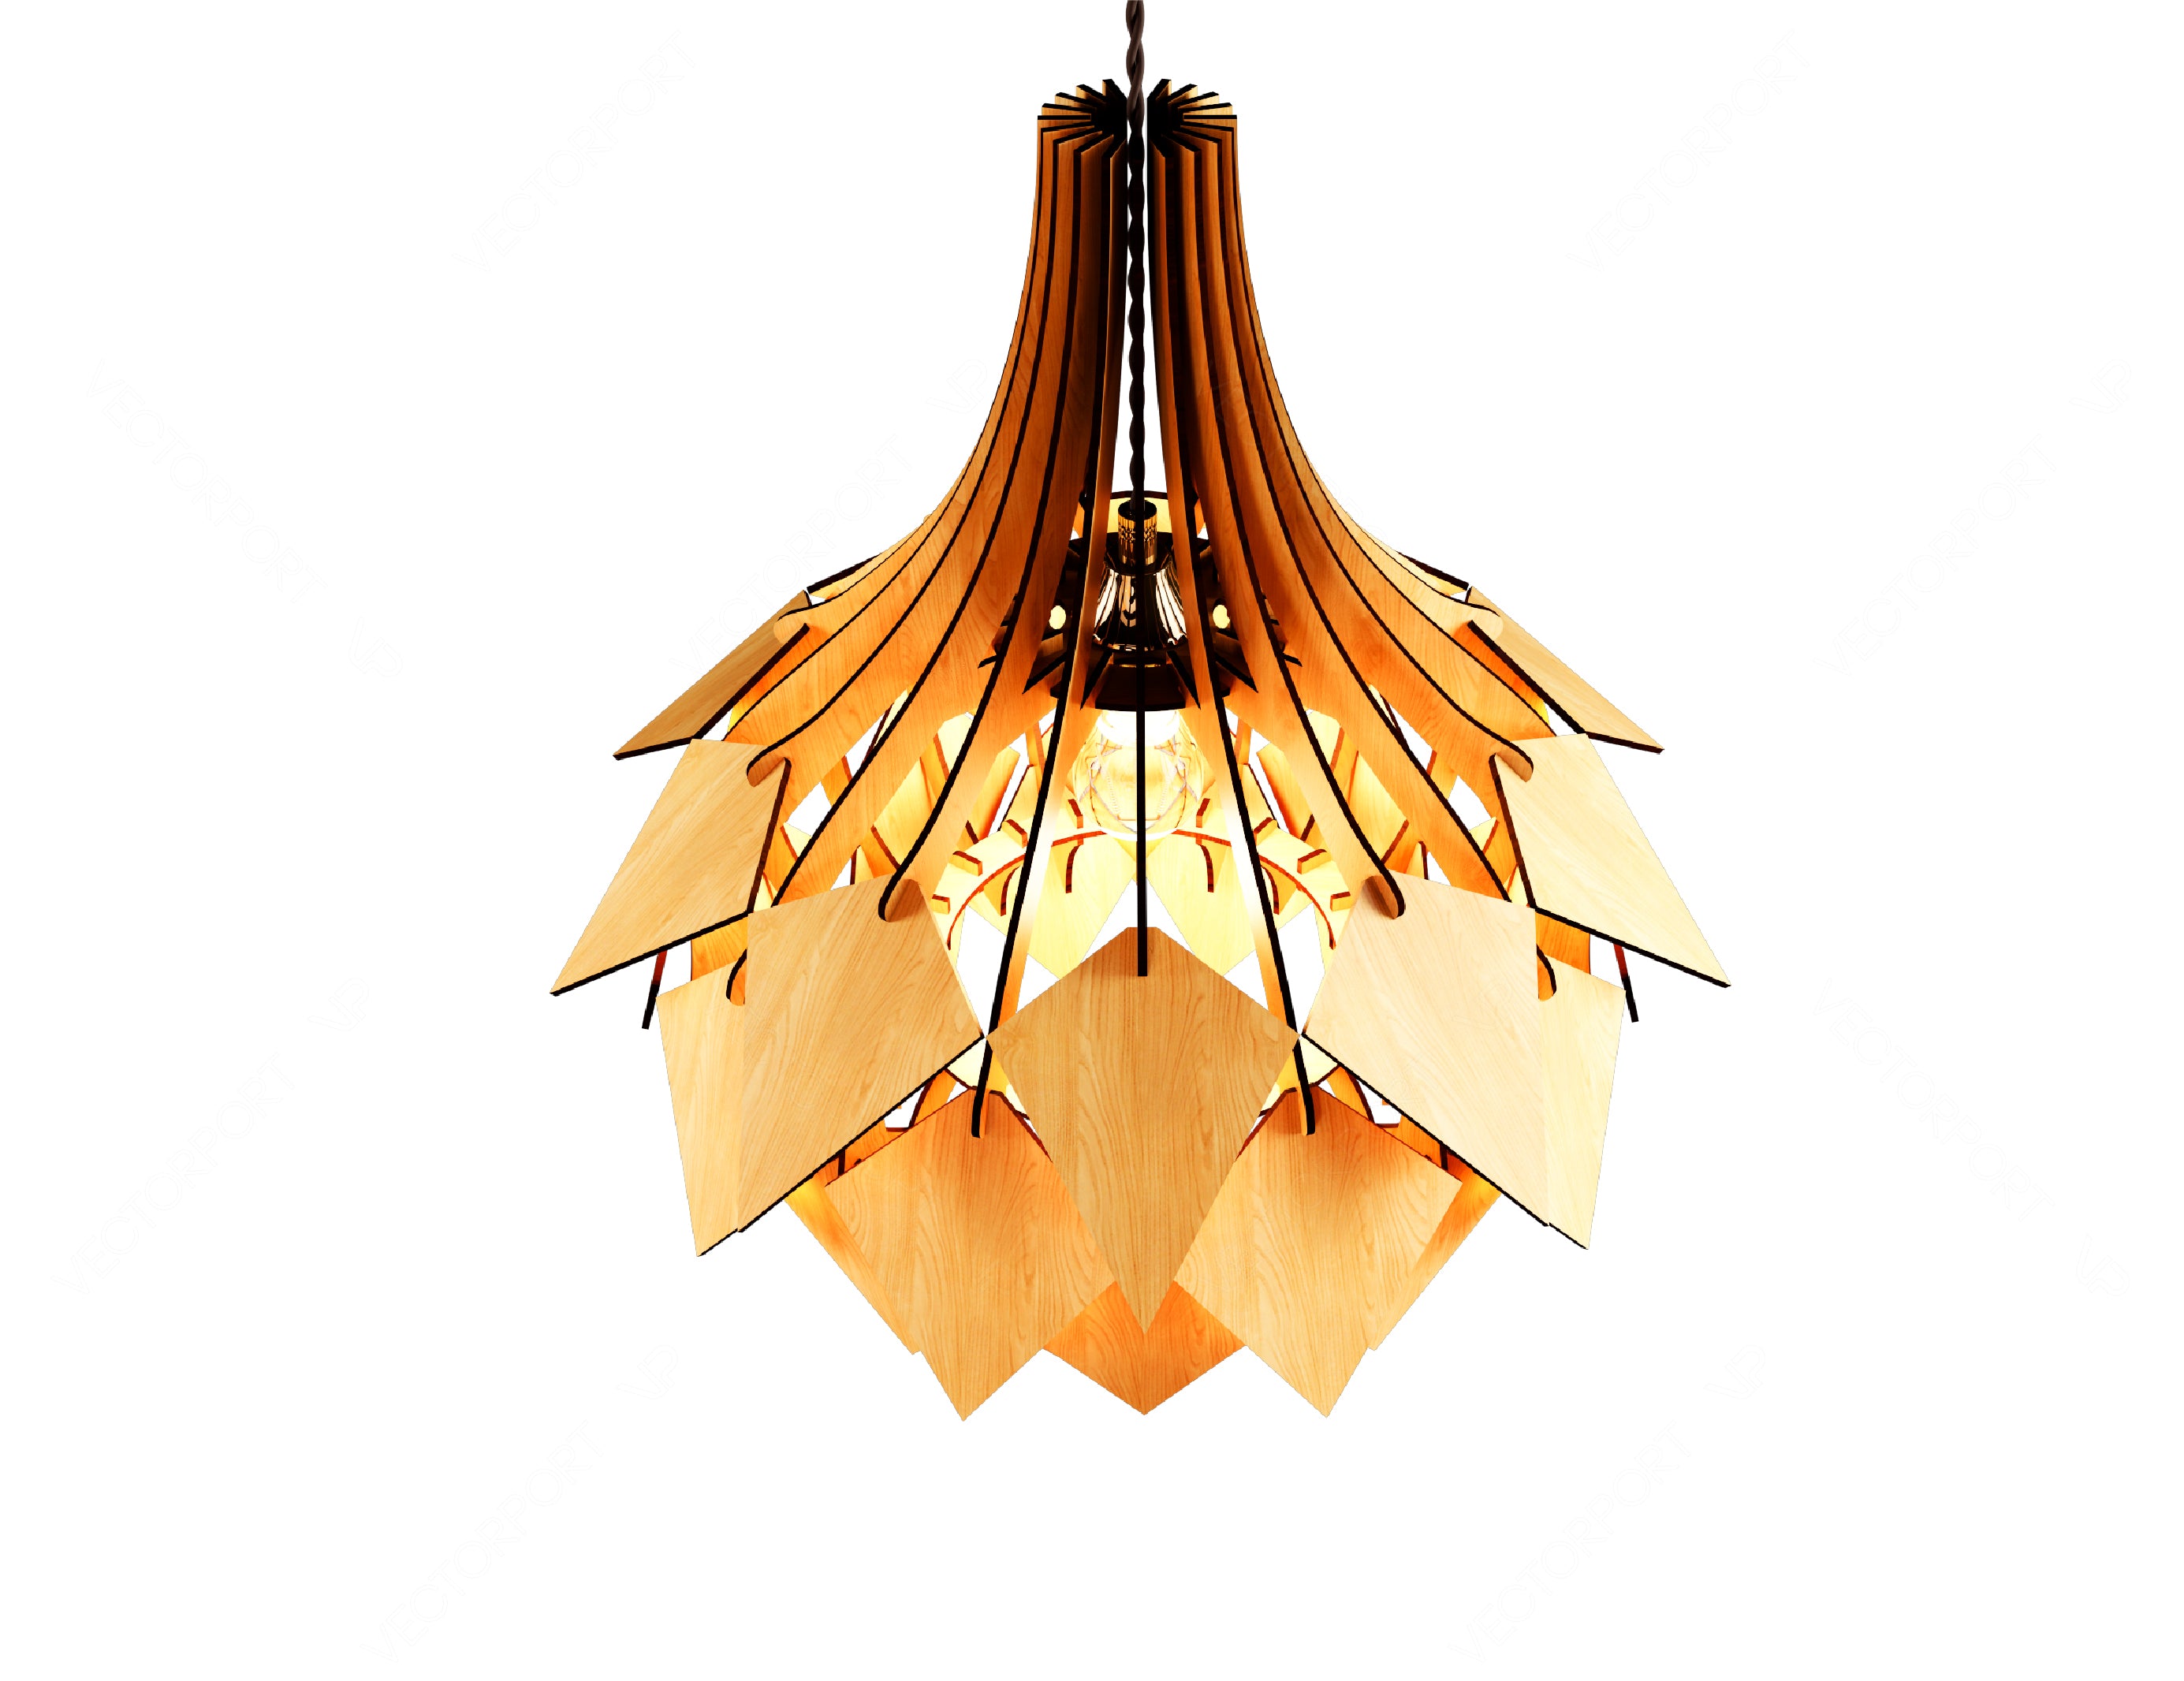 Scandinavian Pine Cone Hanging wooden chandelier lamp shade Pendant light template svg laser cut 1/8 inch plywood Cut Files |#U041|